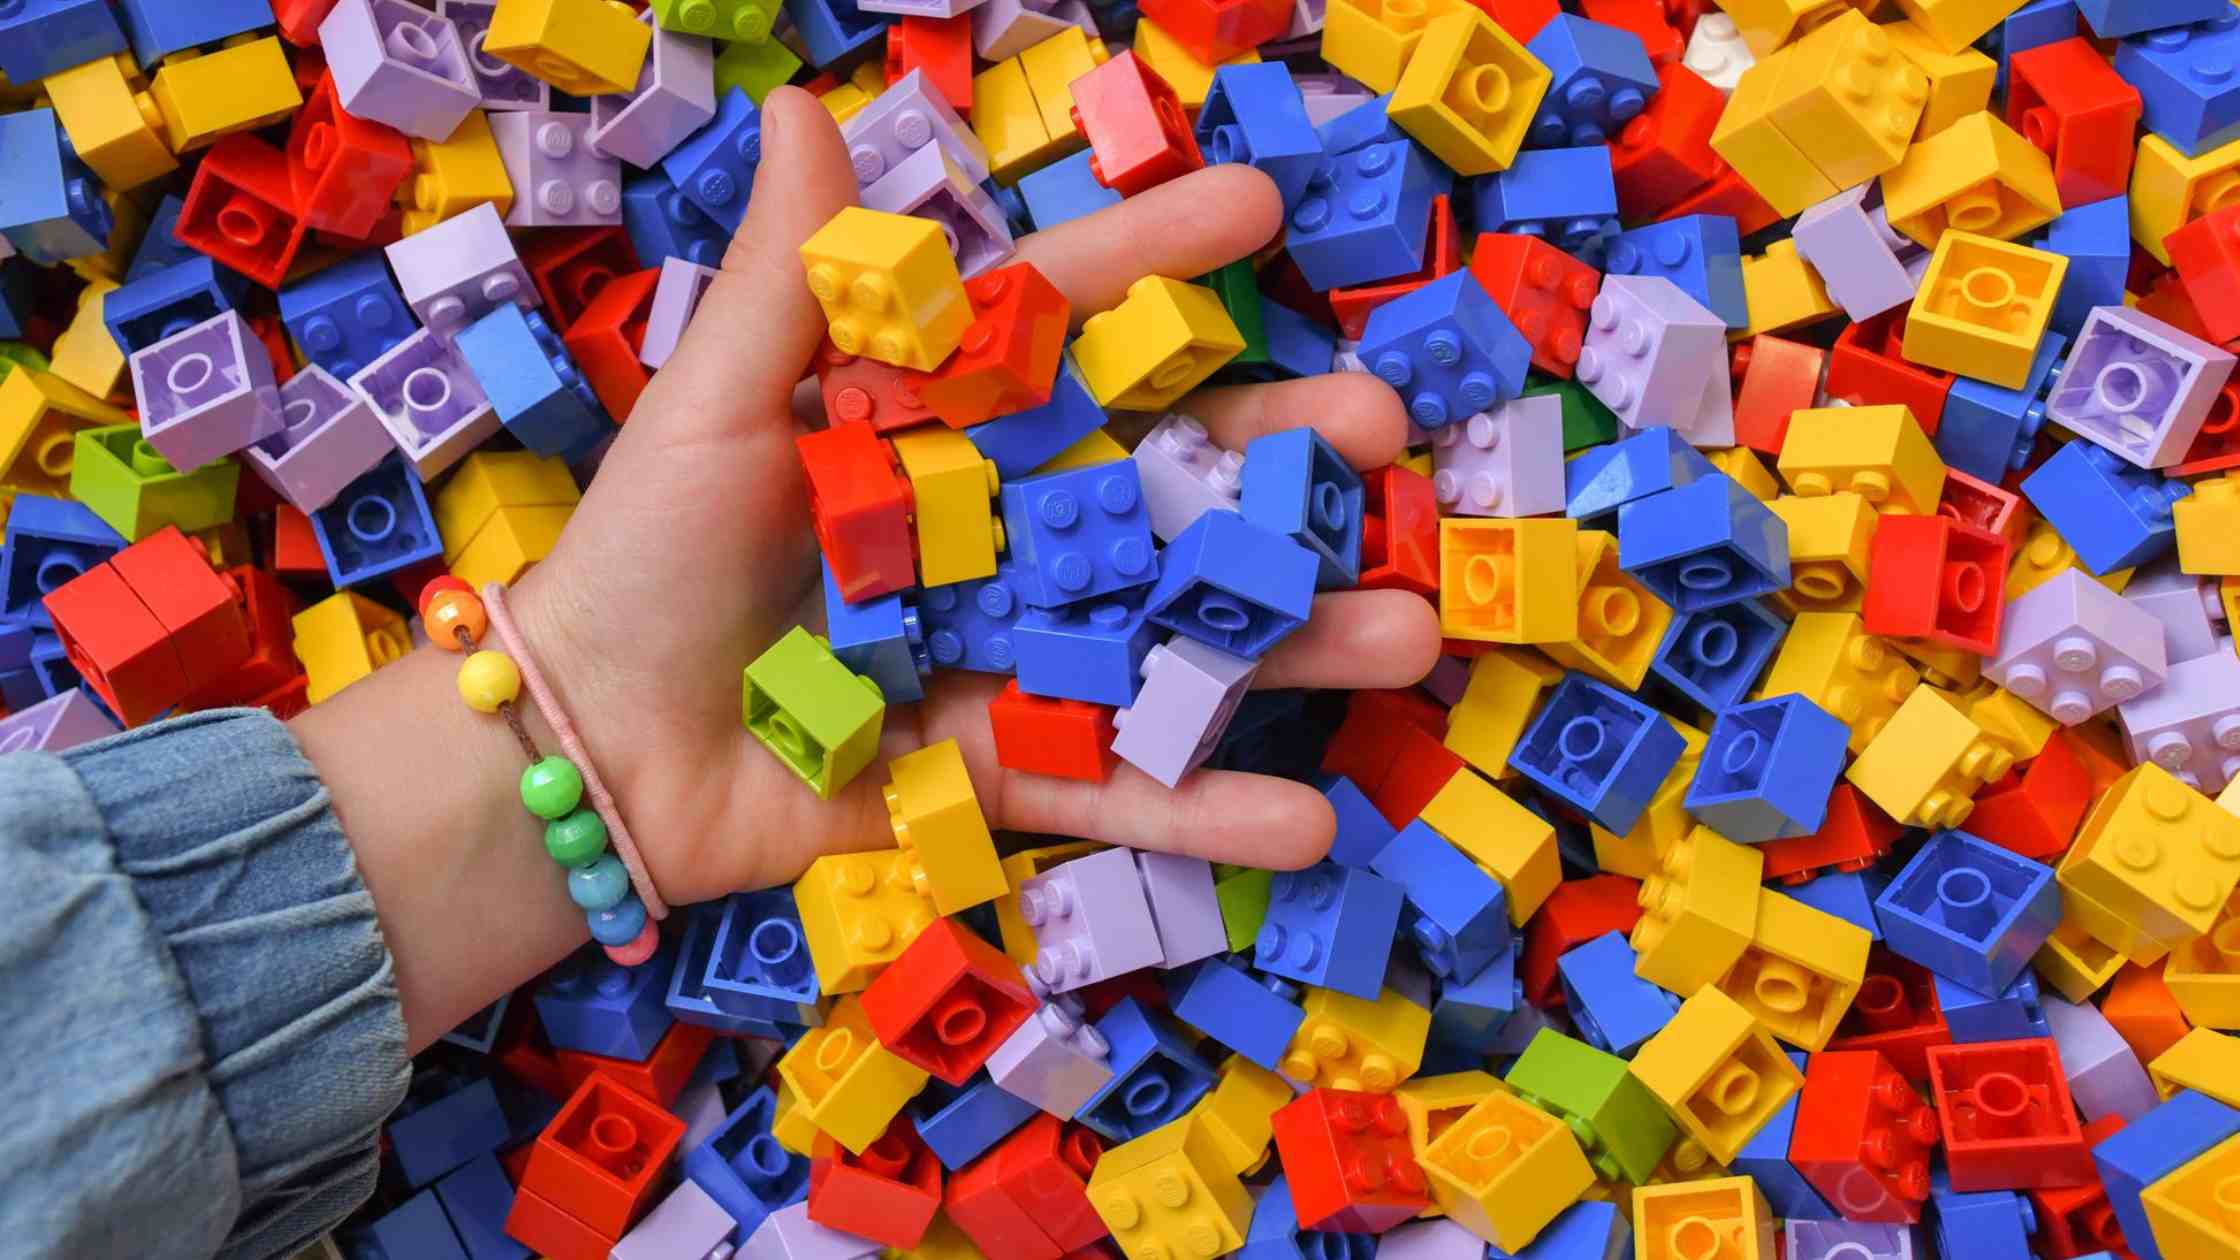 Discontinued Lego Sets